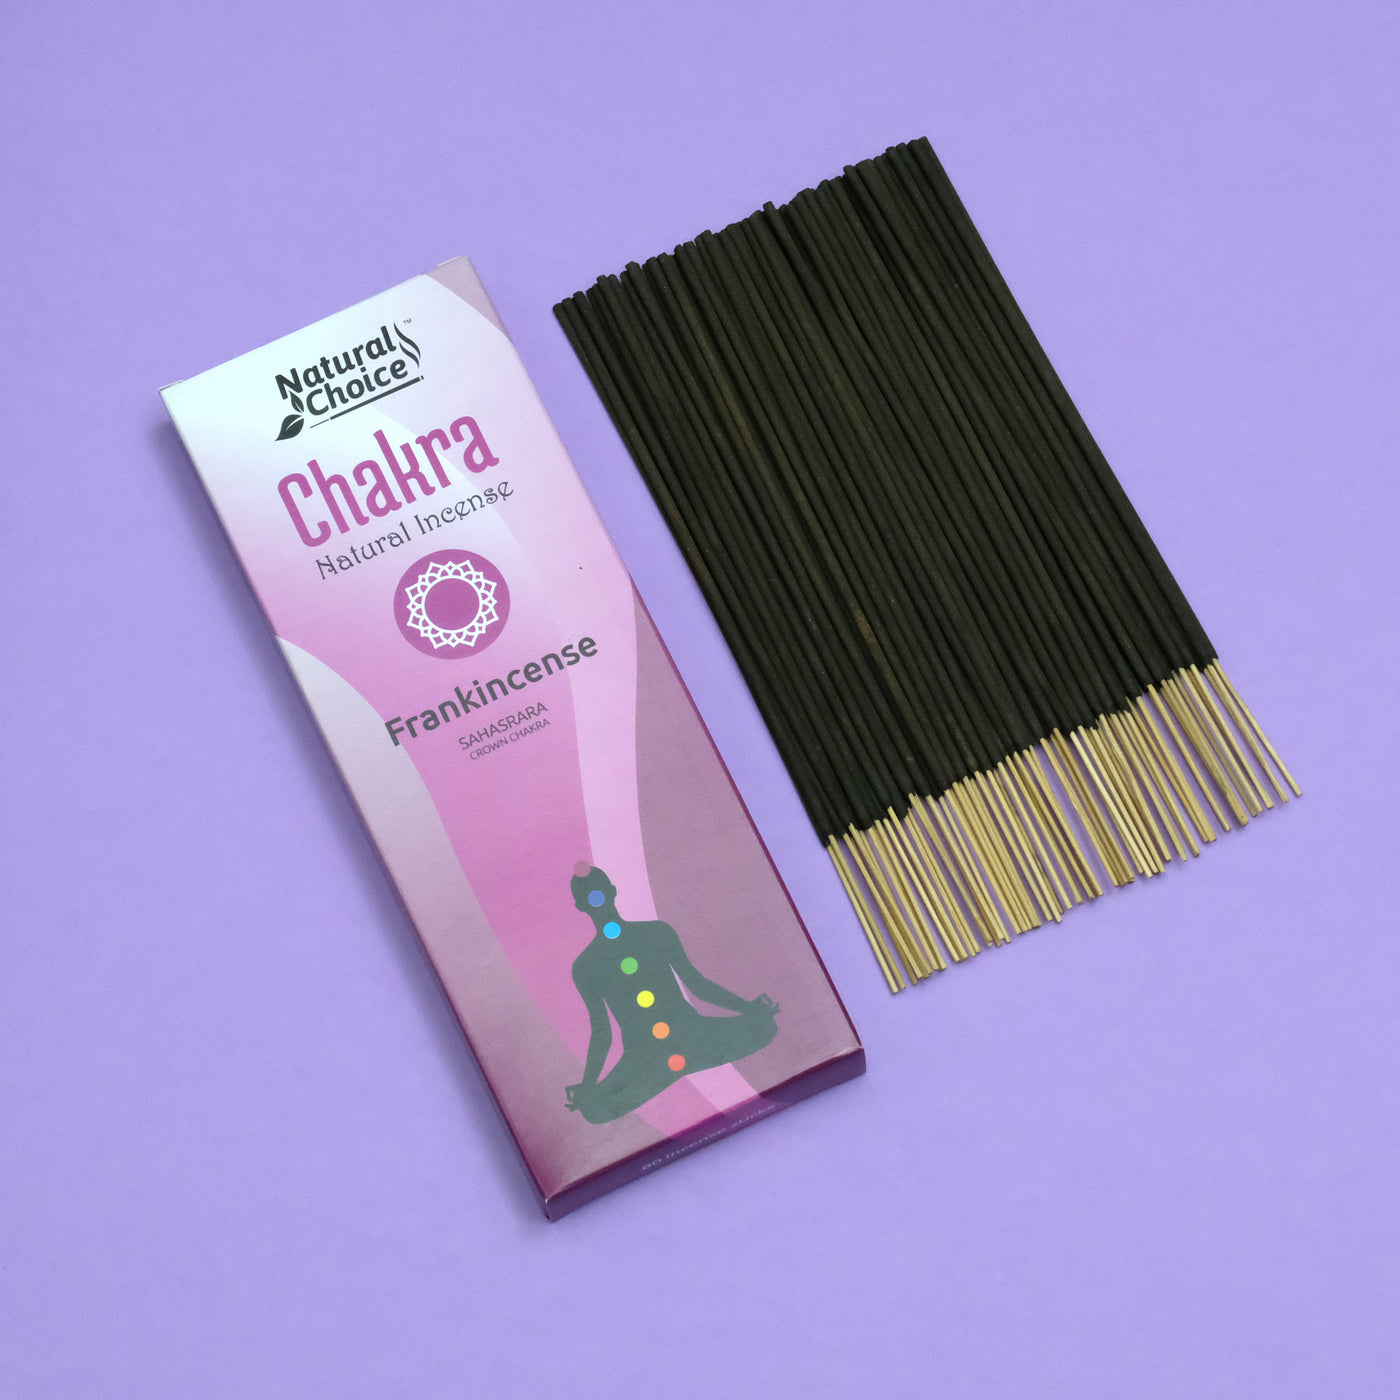 Frankincense Incense - Crown / Sahasrara Chakra Incense 80 sticks